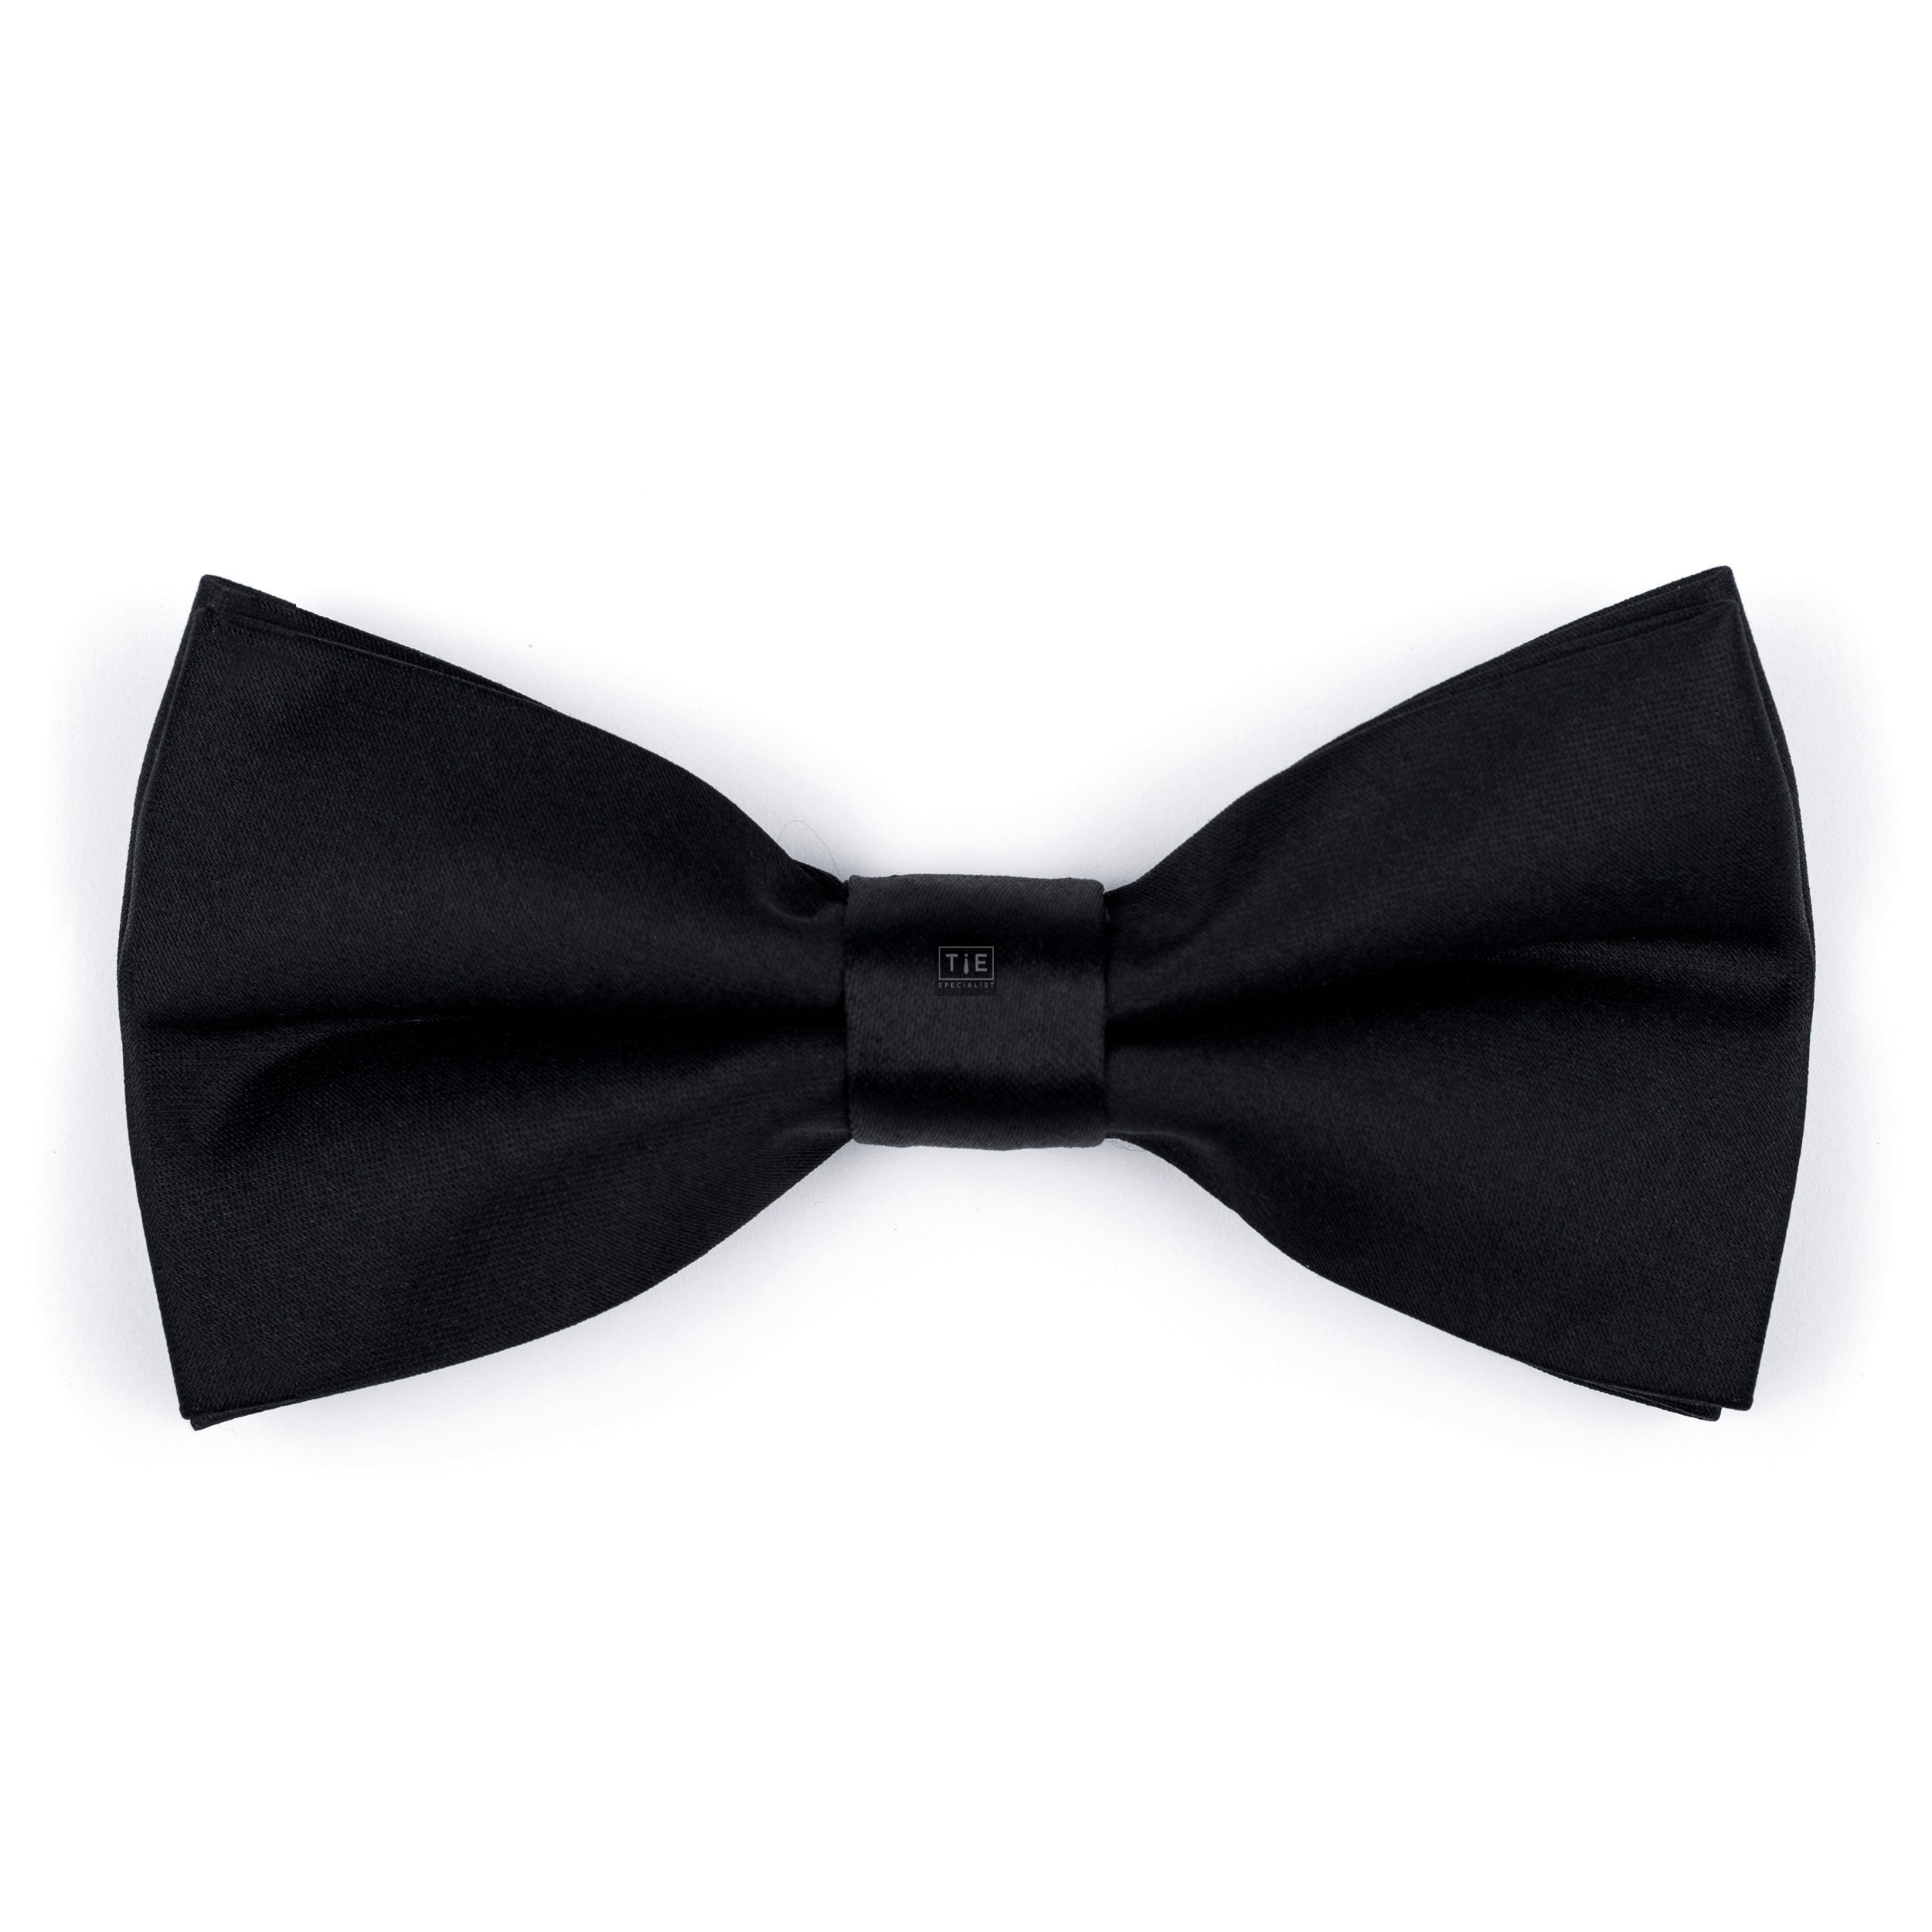 Black Onyx Bow Tie - Plain Black Pre-Tied Wedding Bow Tie